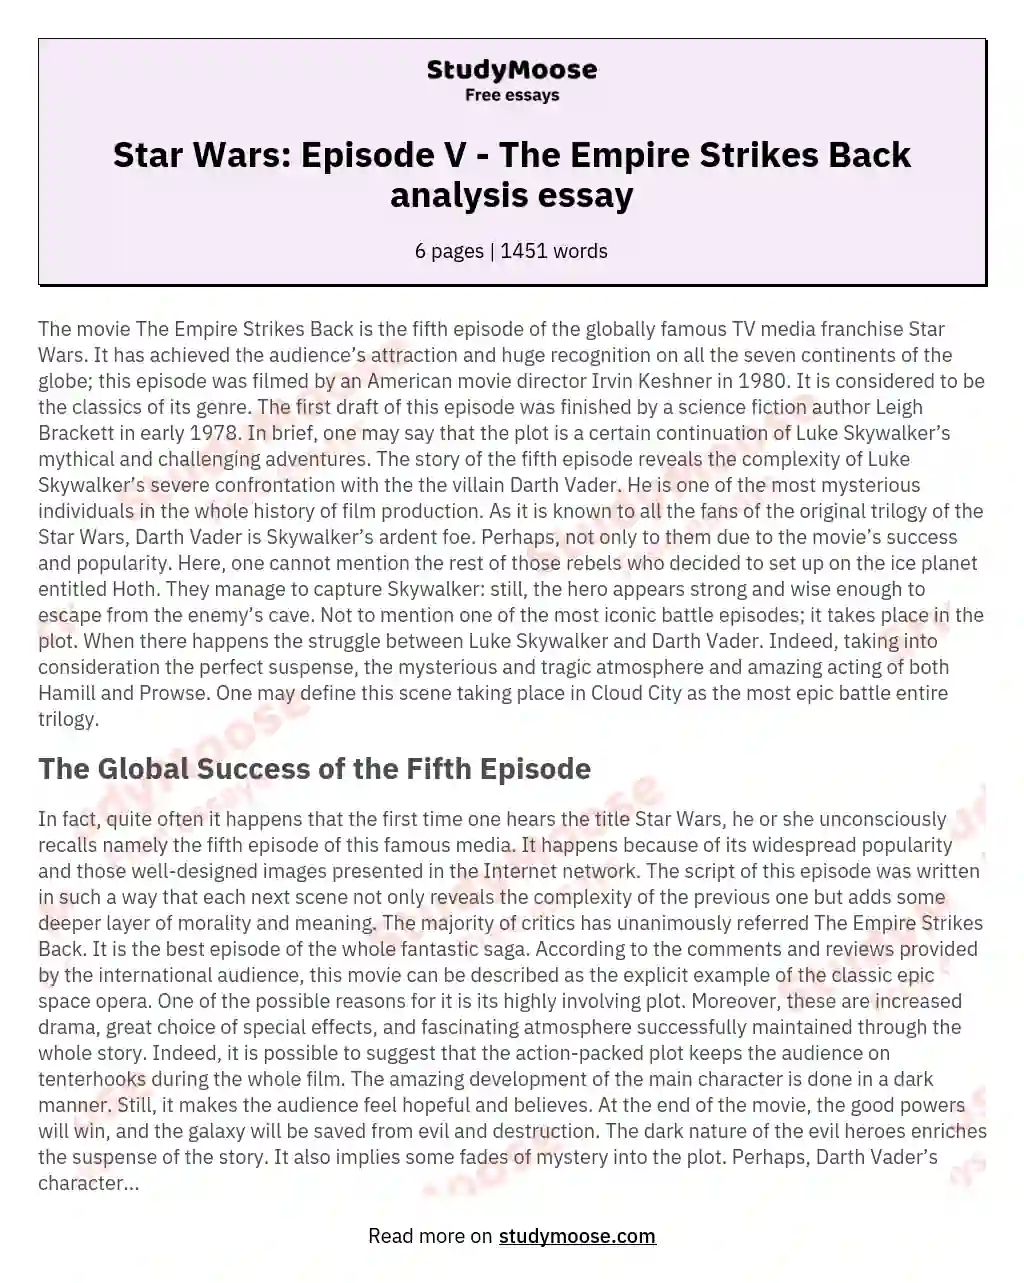 Star Wars: Episode V - The Empire Strikes Back analysis essay